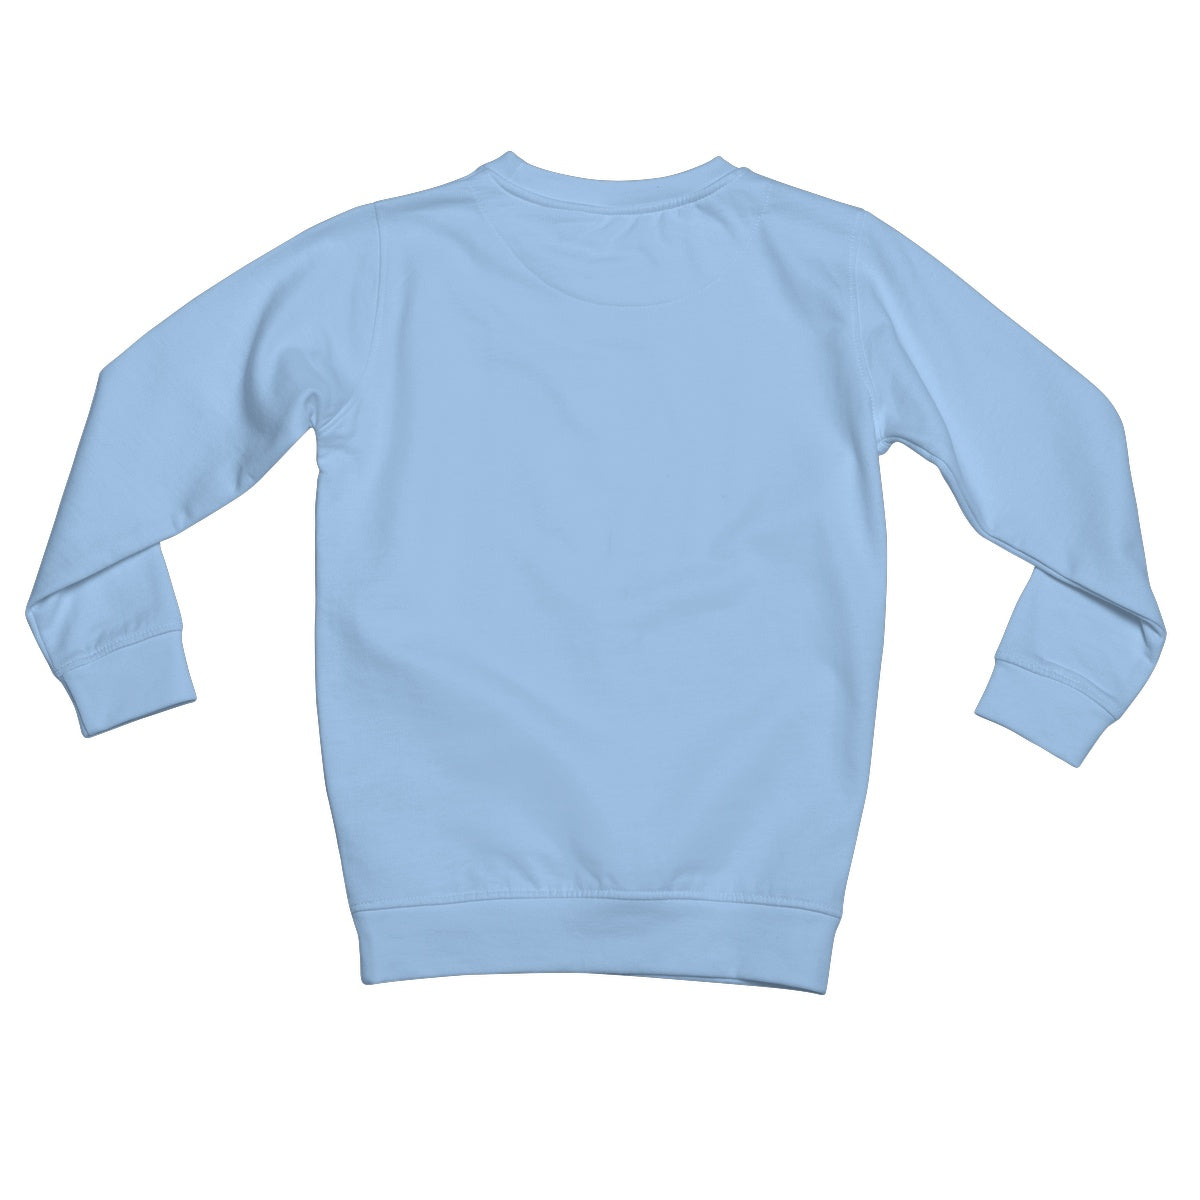 Plastic World Kids Sweatshirt